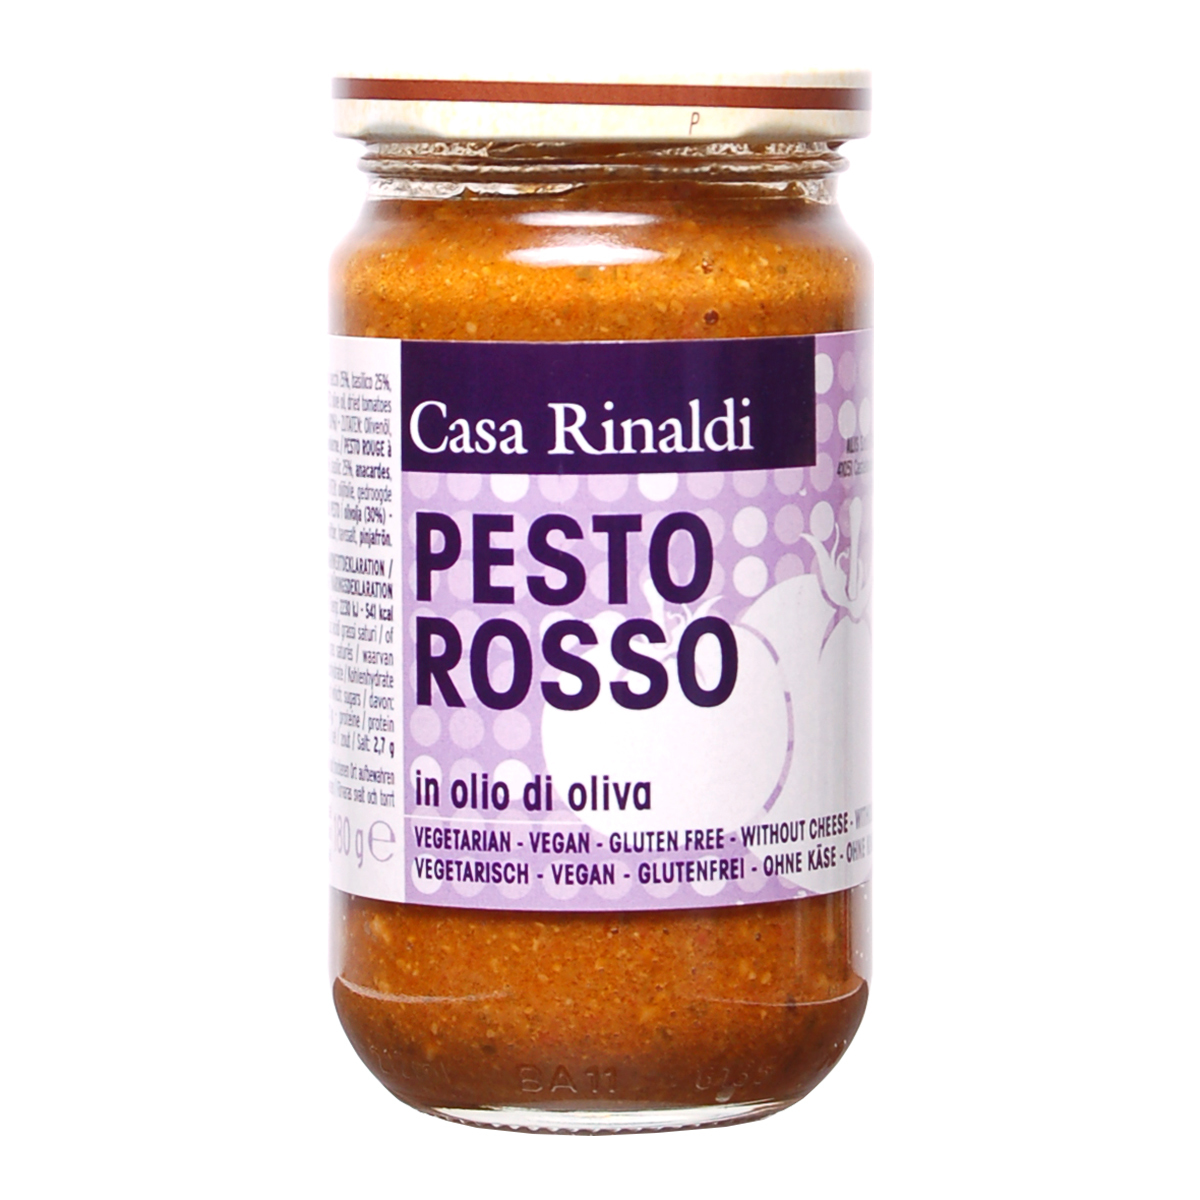 Francesco rinaldi no salt added pasta sauce